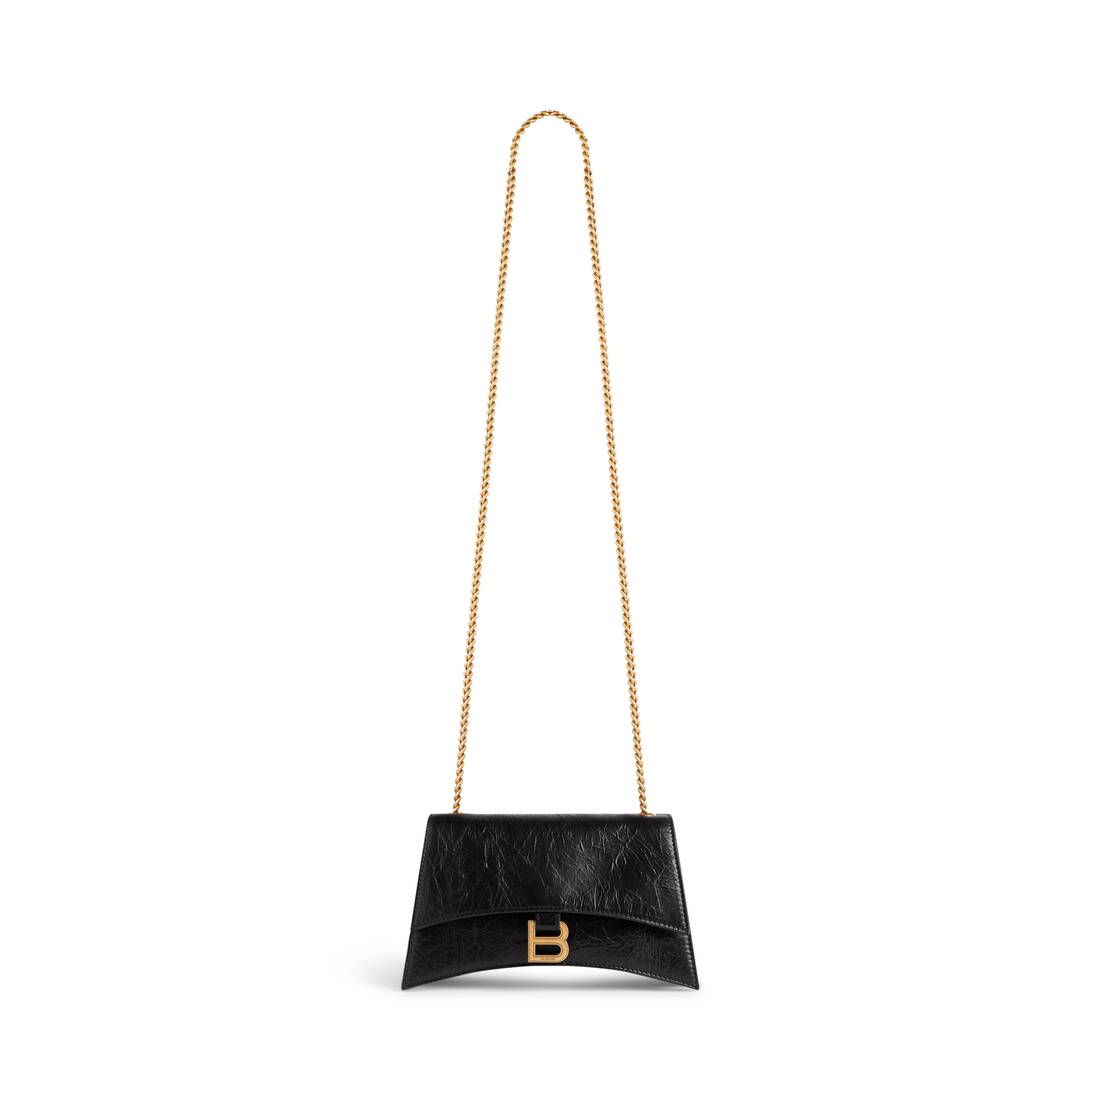 Women's Hourglass Mini Bag With Chain by Balenciaga